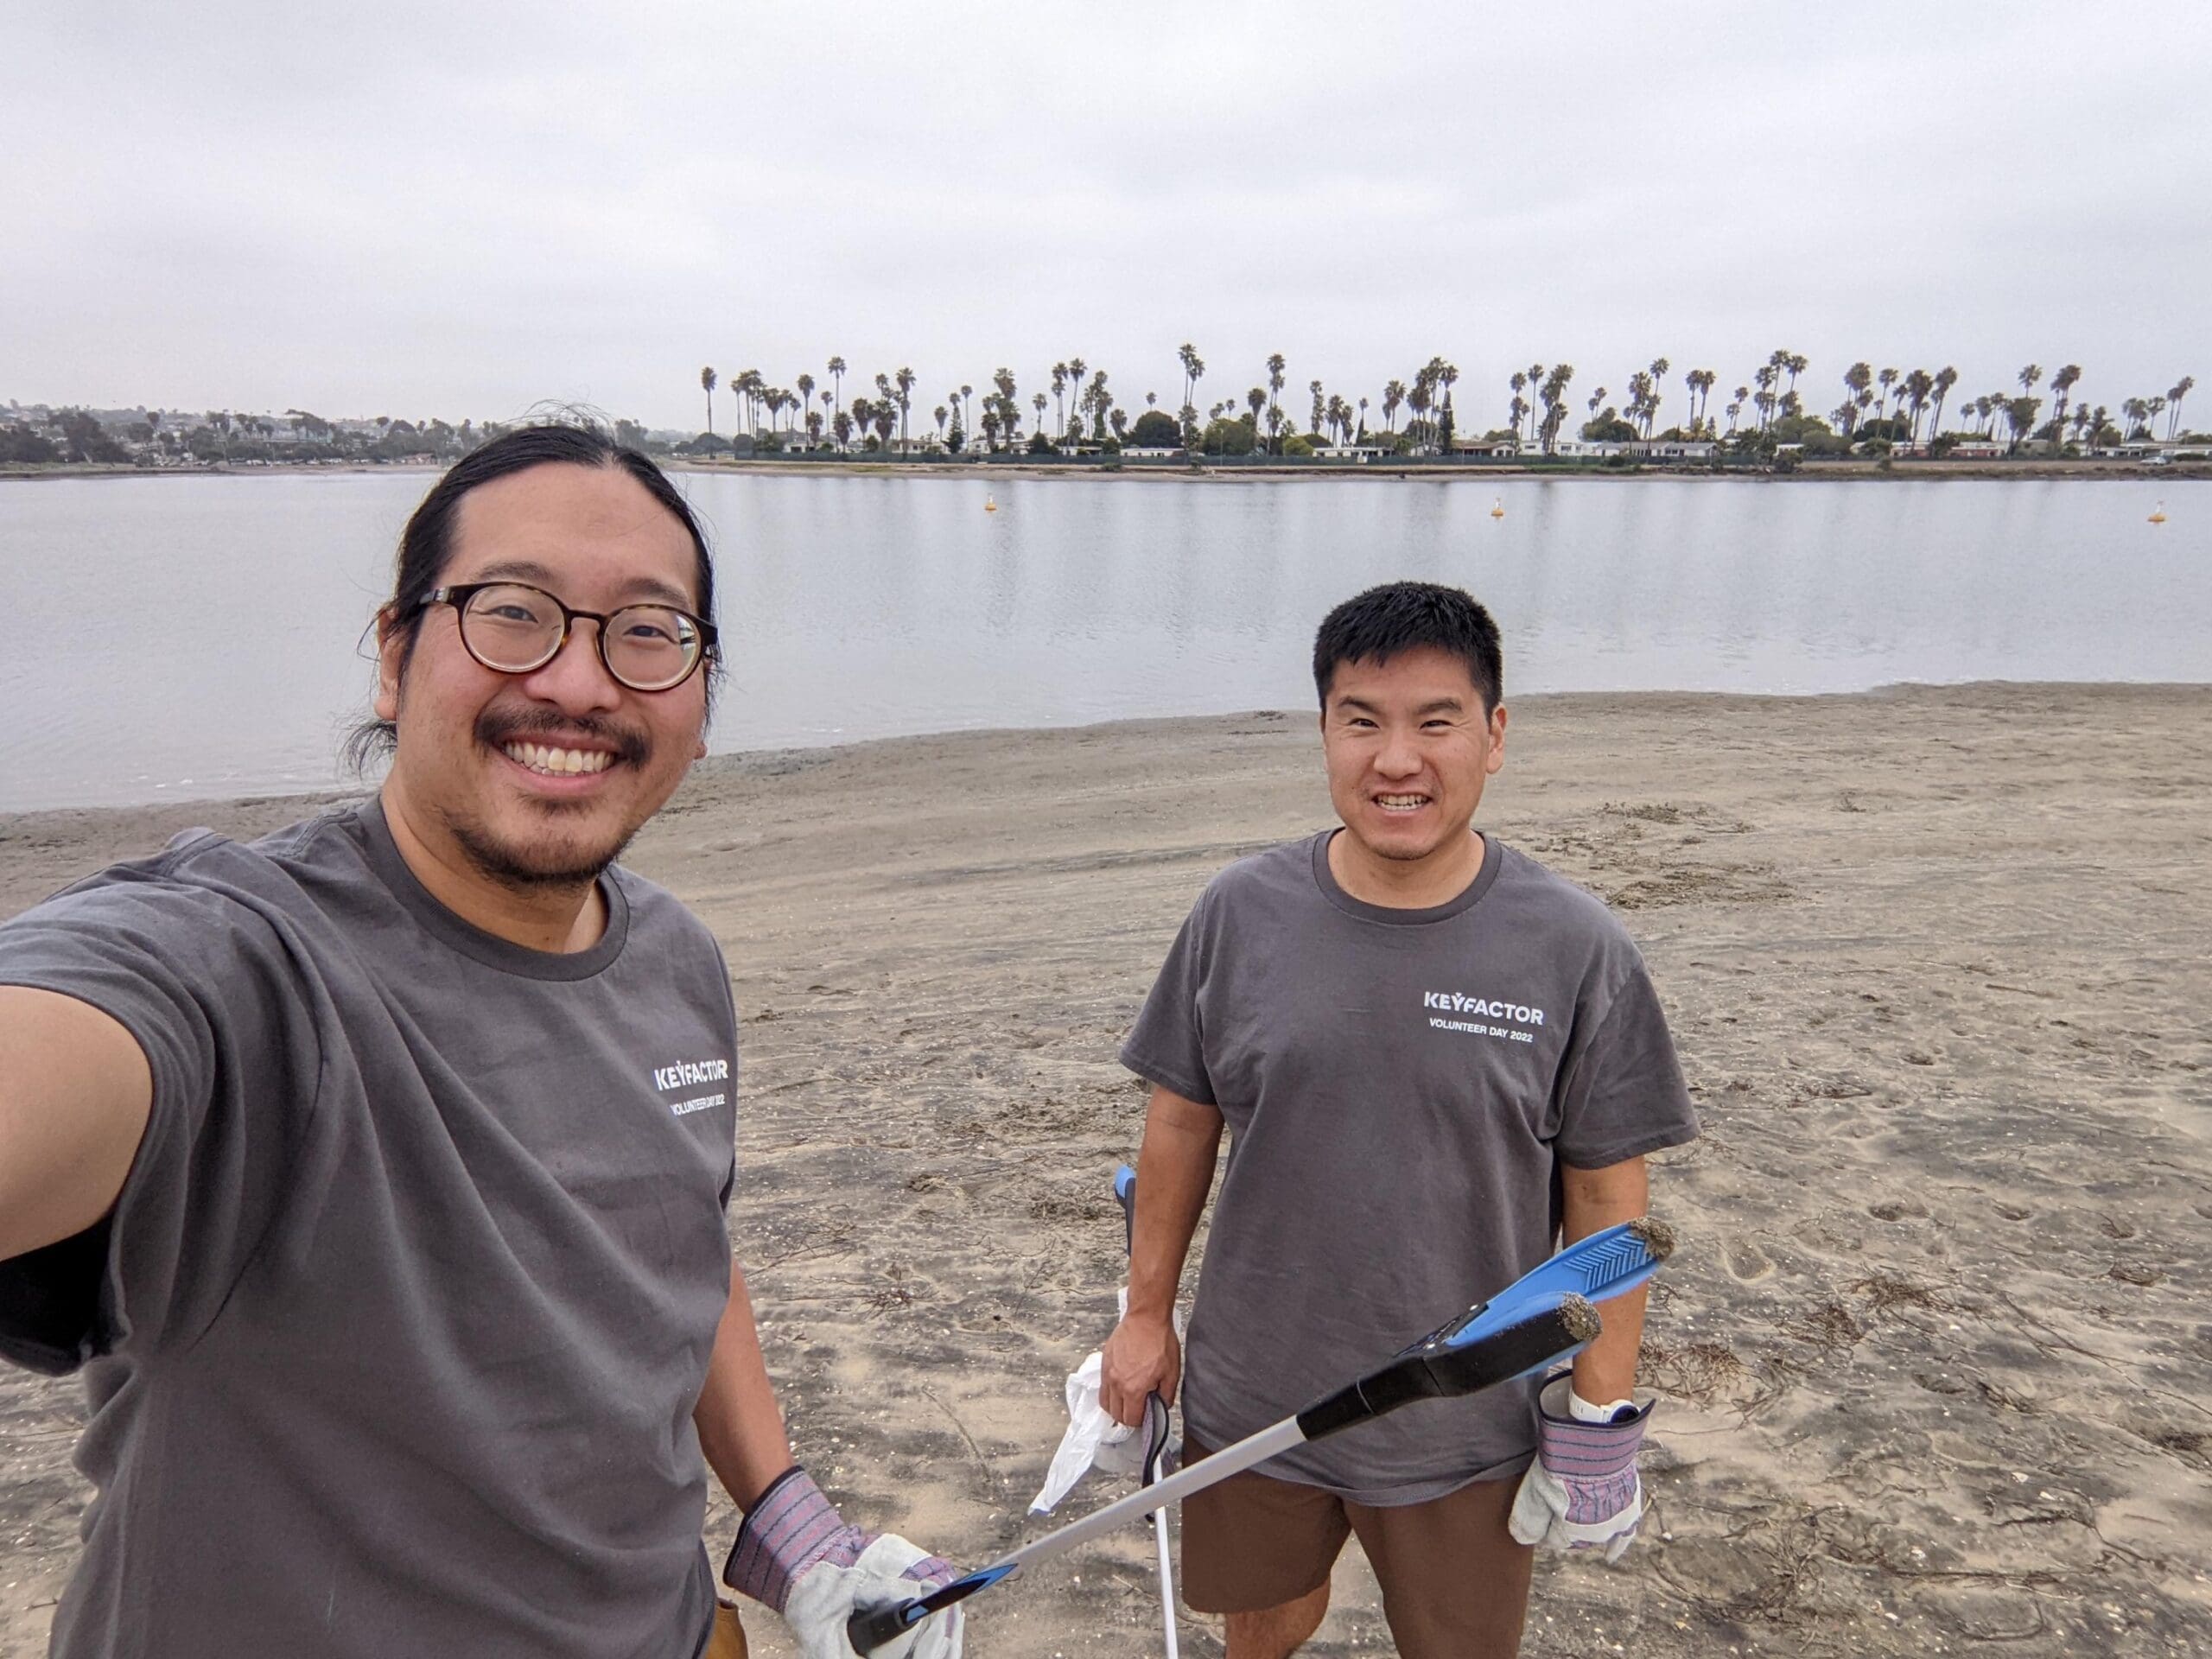 Keyfactor team members cleaning up a beach during Volunteer Days 2022